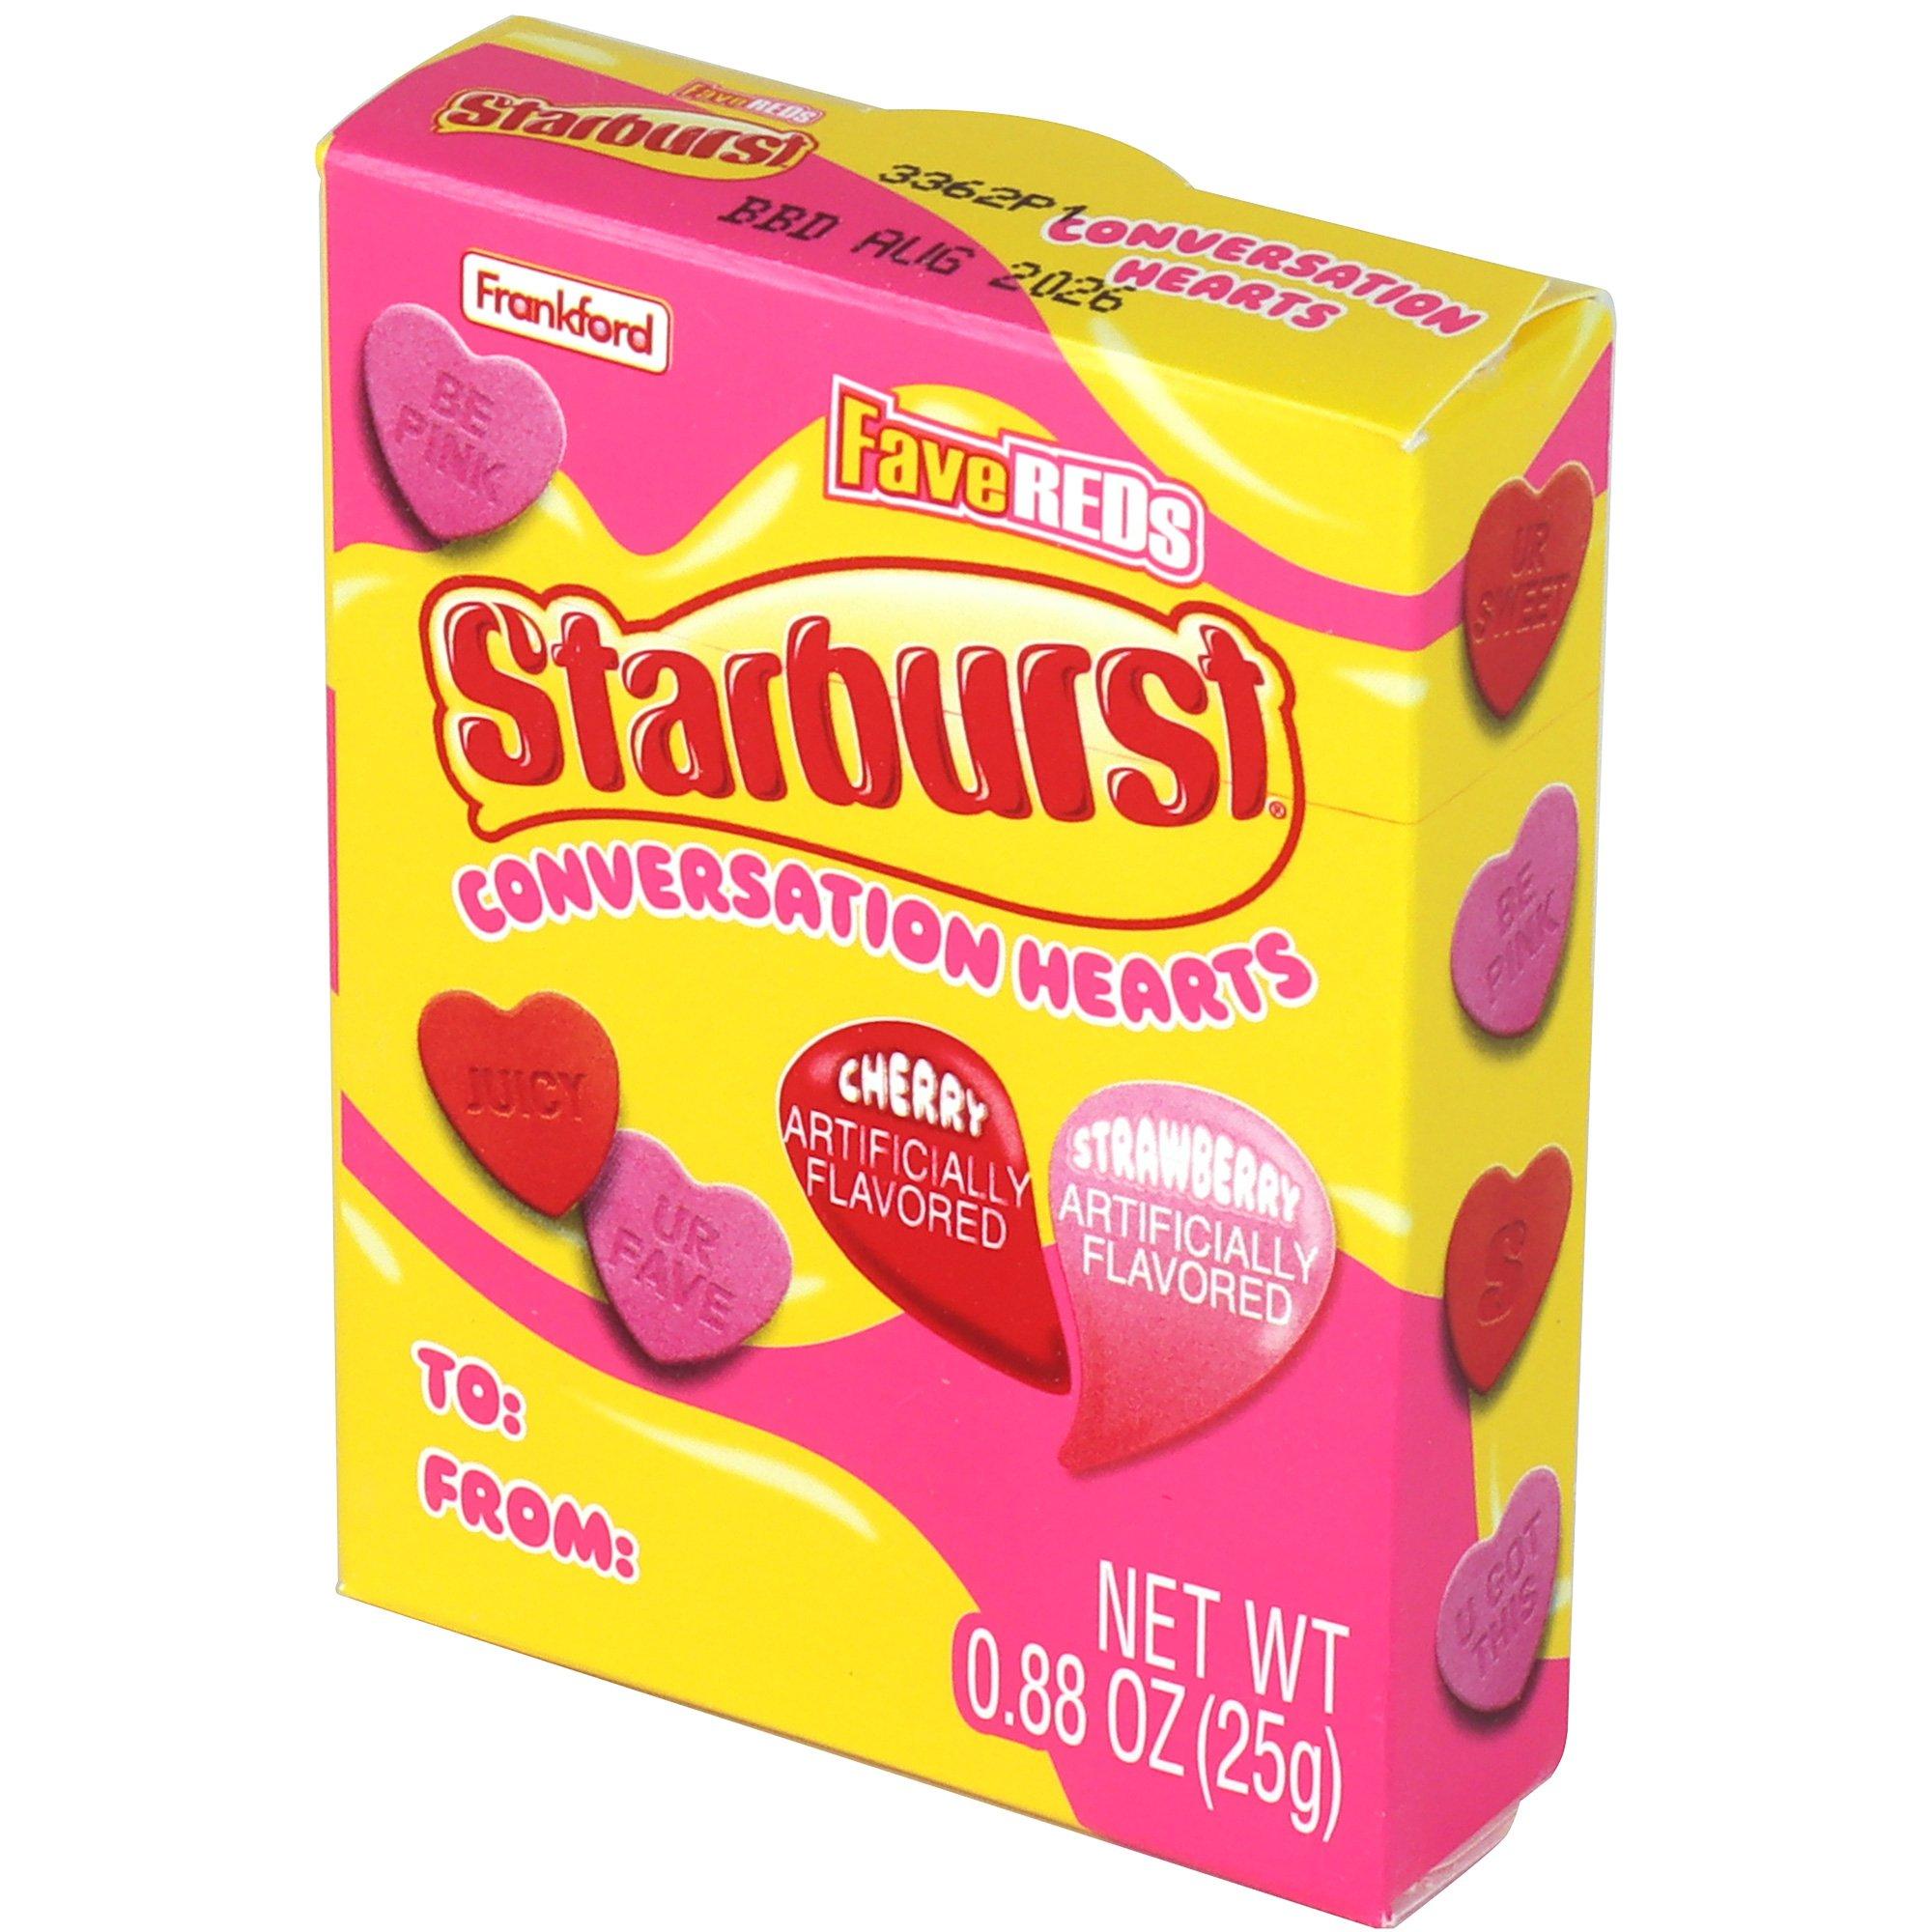 Starburst Conversation Hearts - 13oz - Blair Candy Company